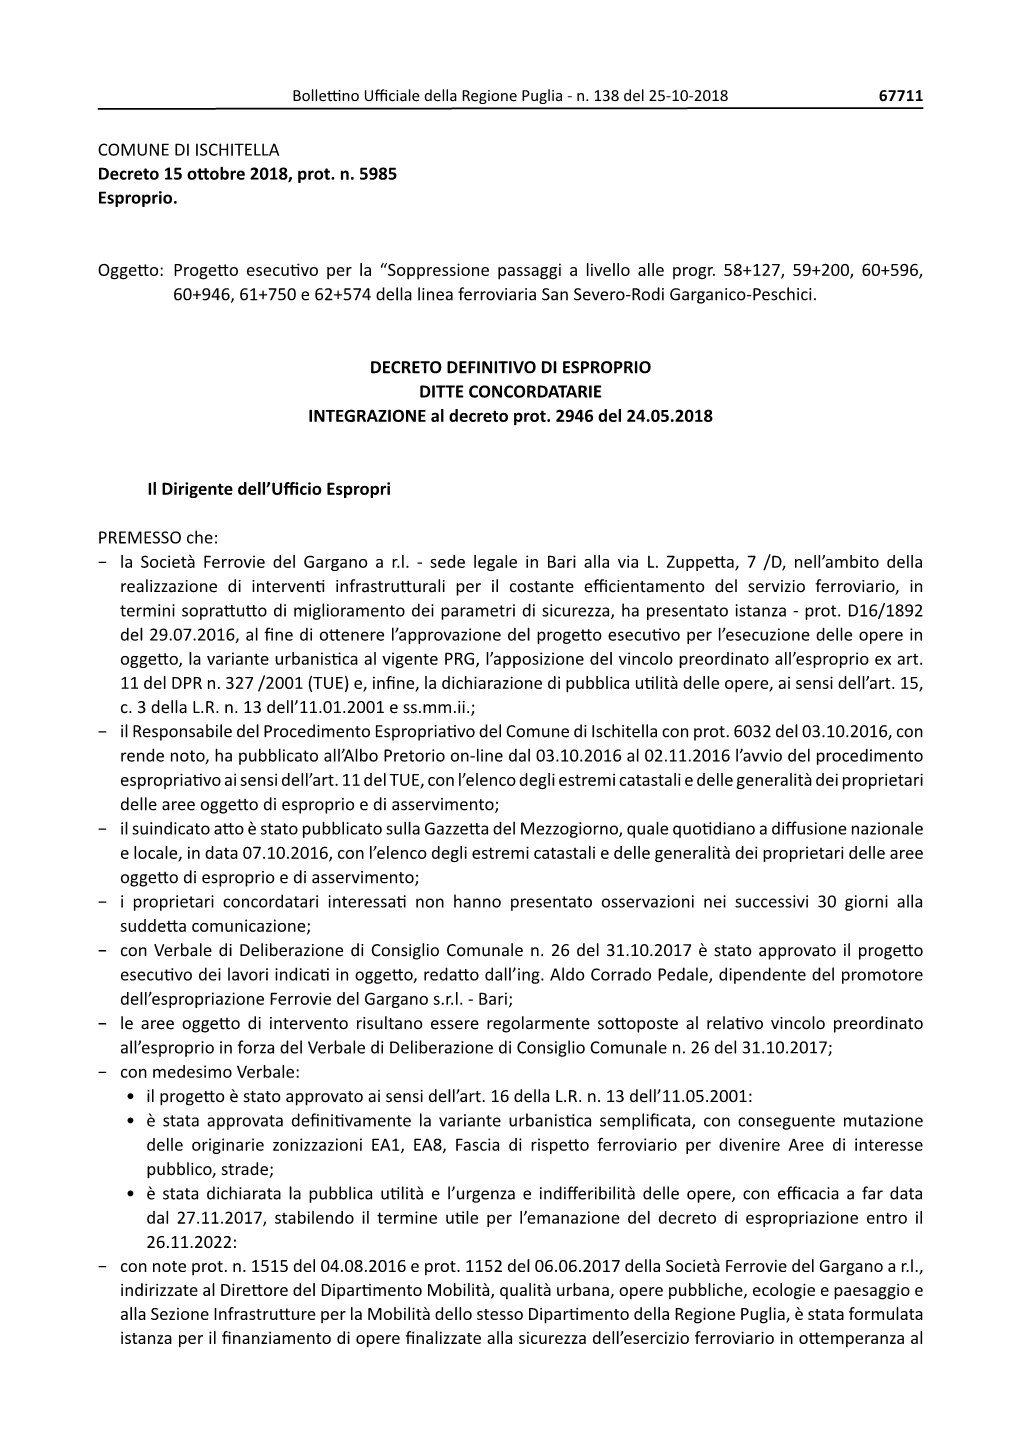 COMUNE DI ISCHITELLA Decreto 15 Ottobre 2018, Prot